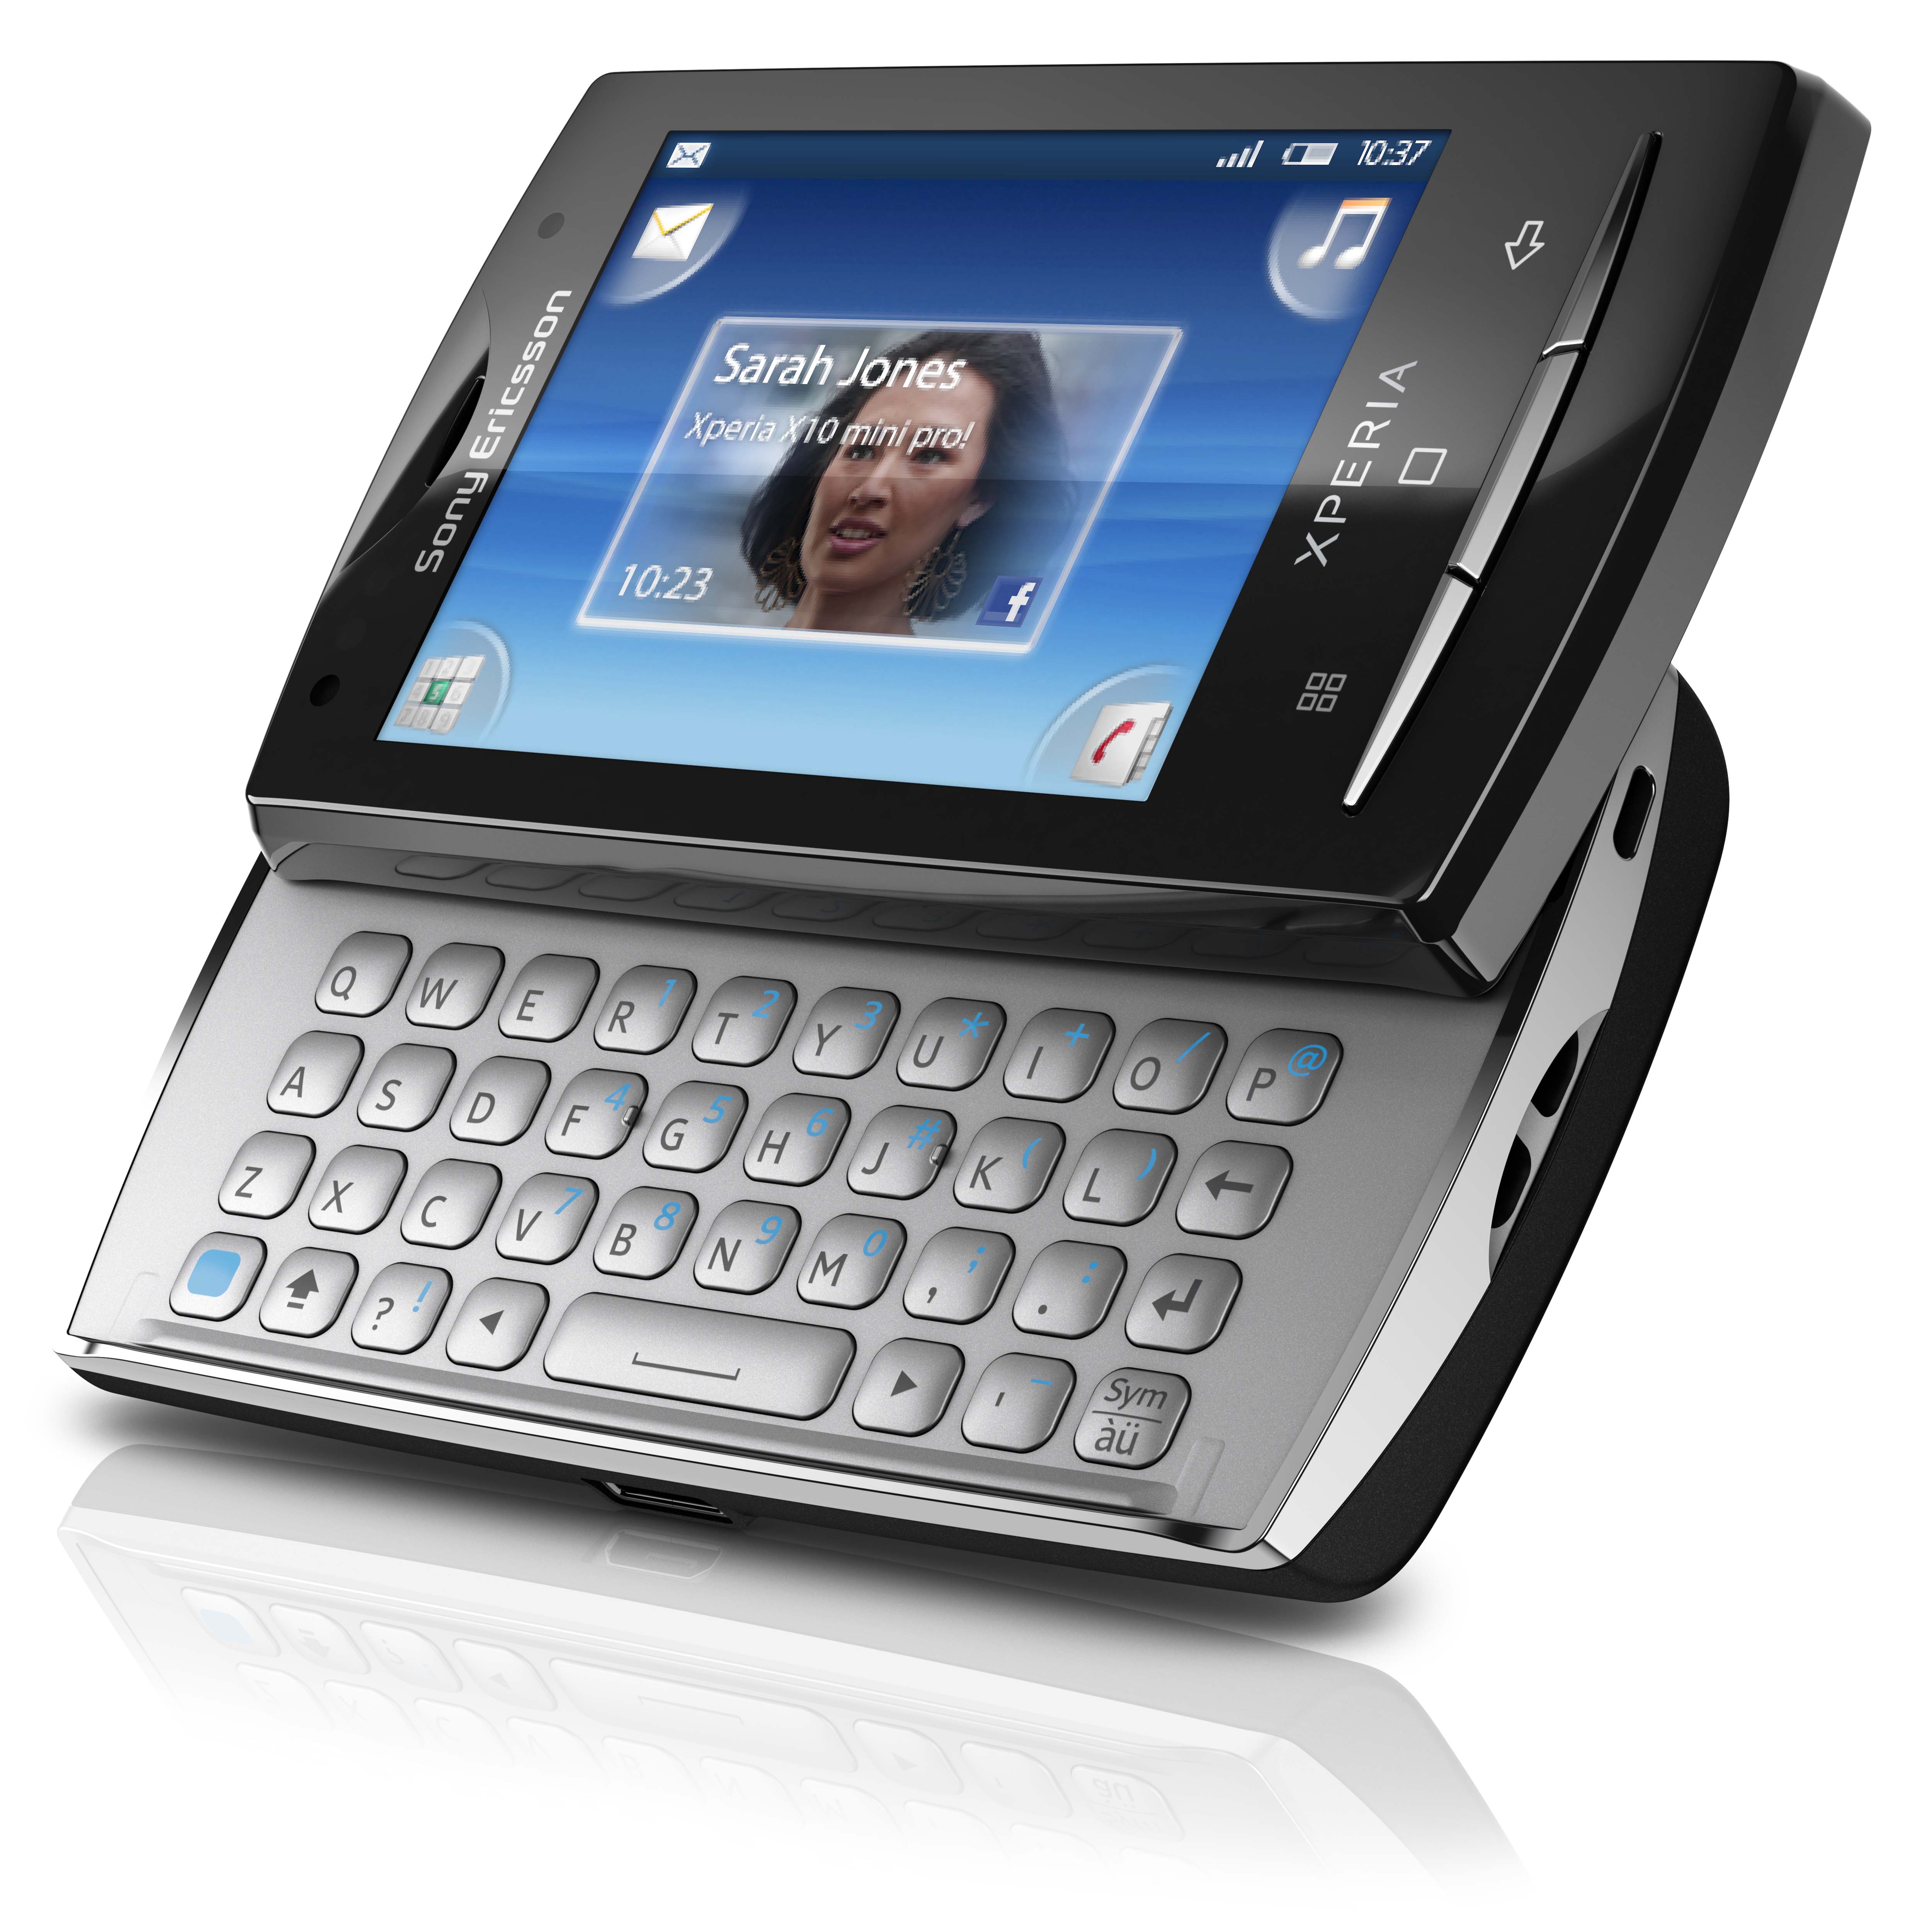 Sony Ericsson Xperia X10 mini pro - зображення 1